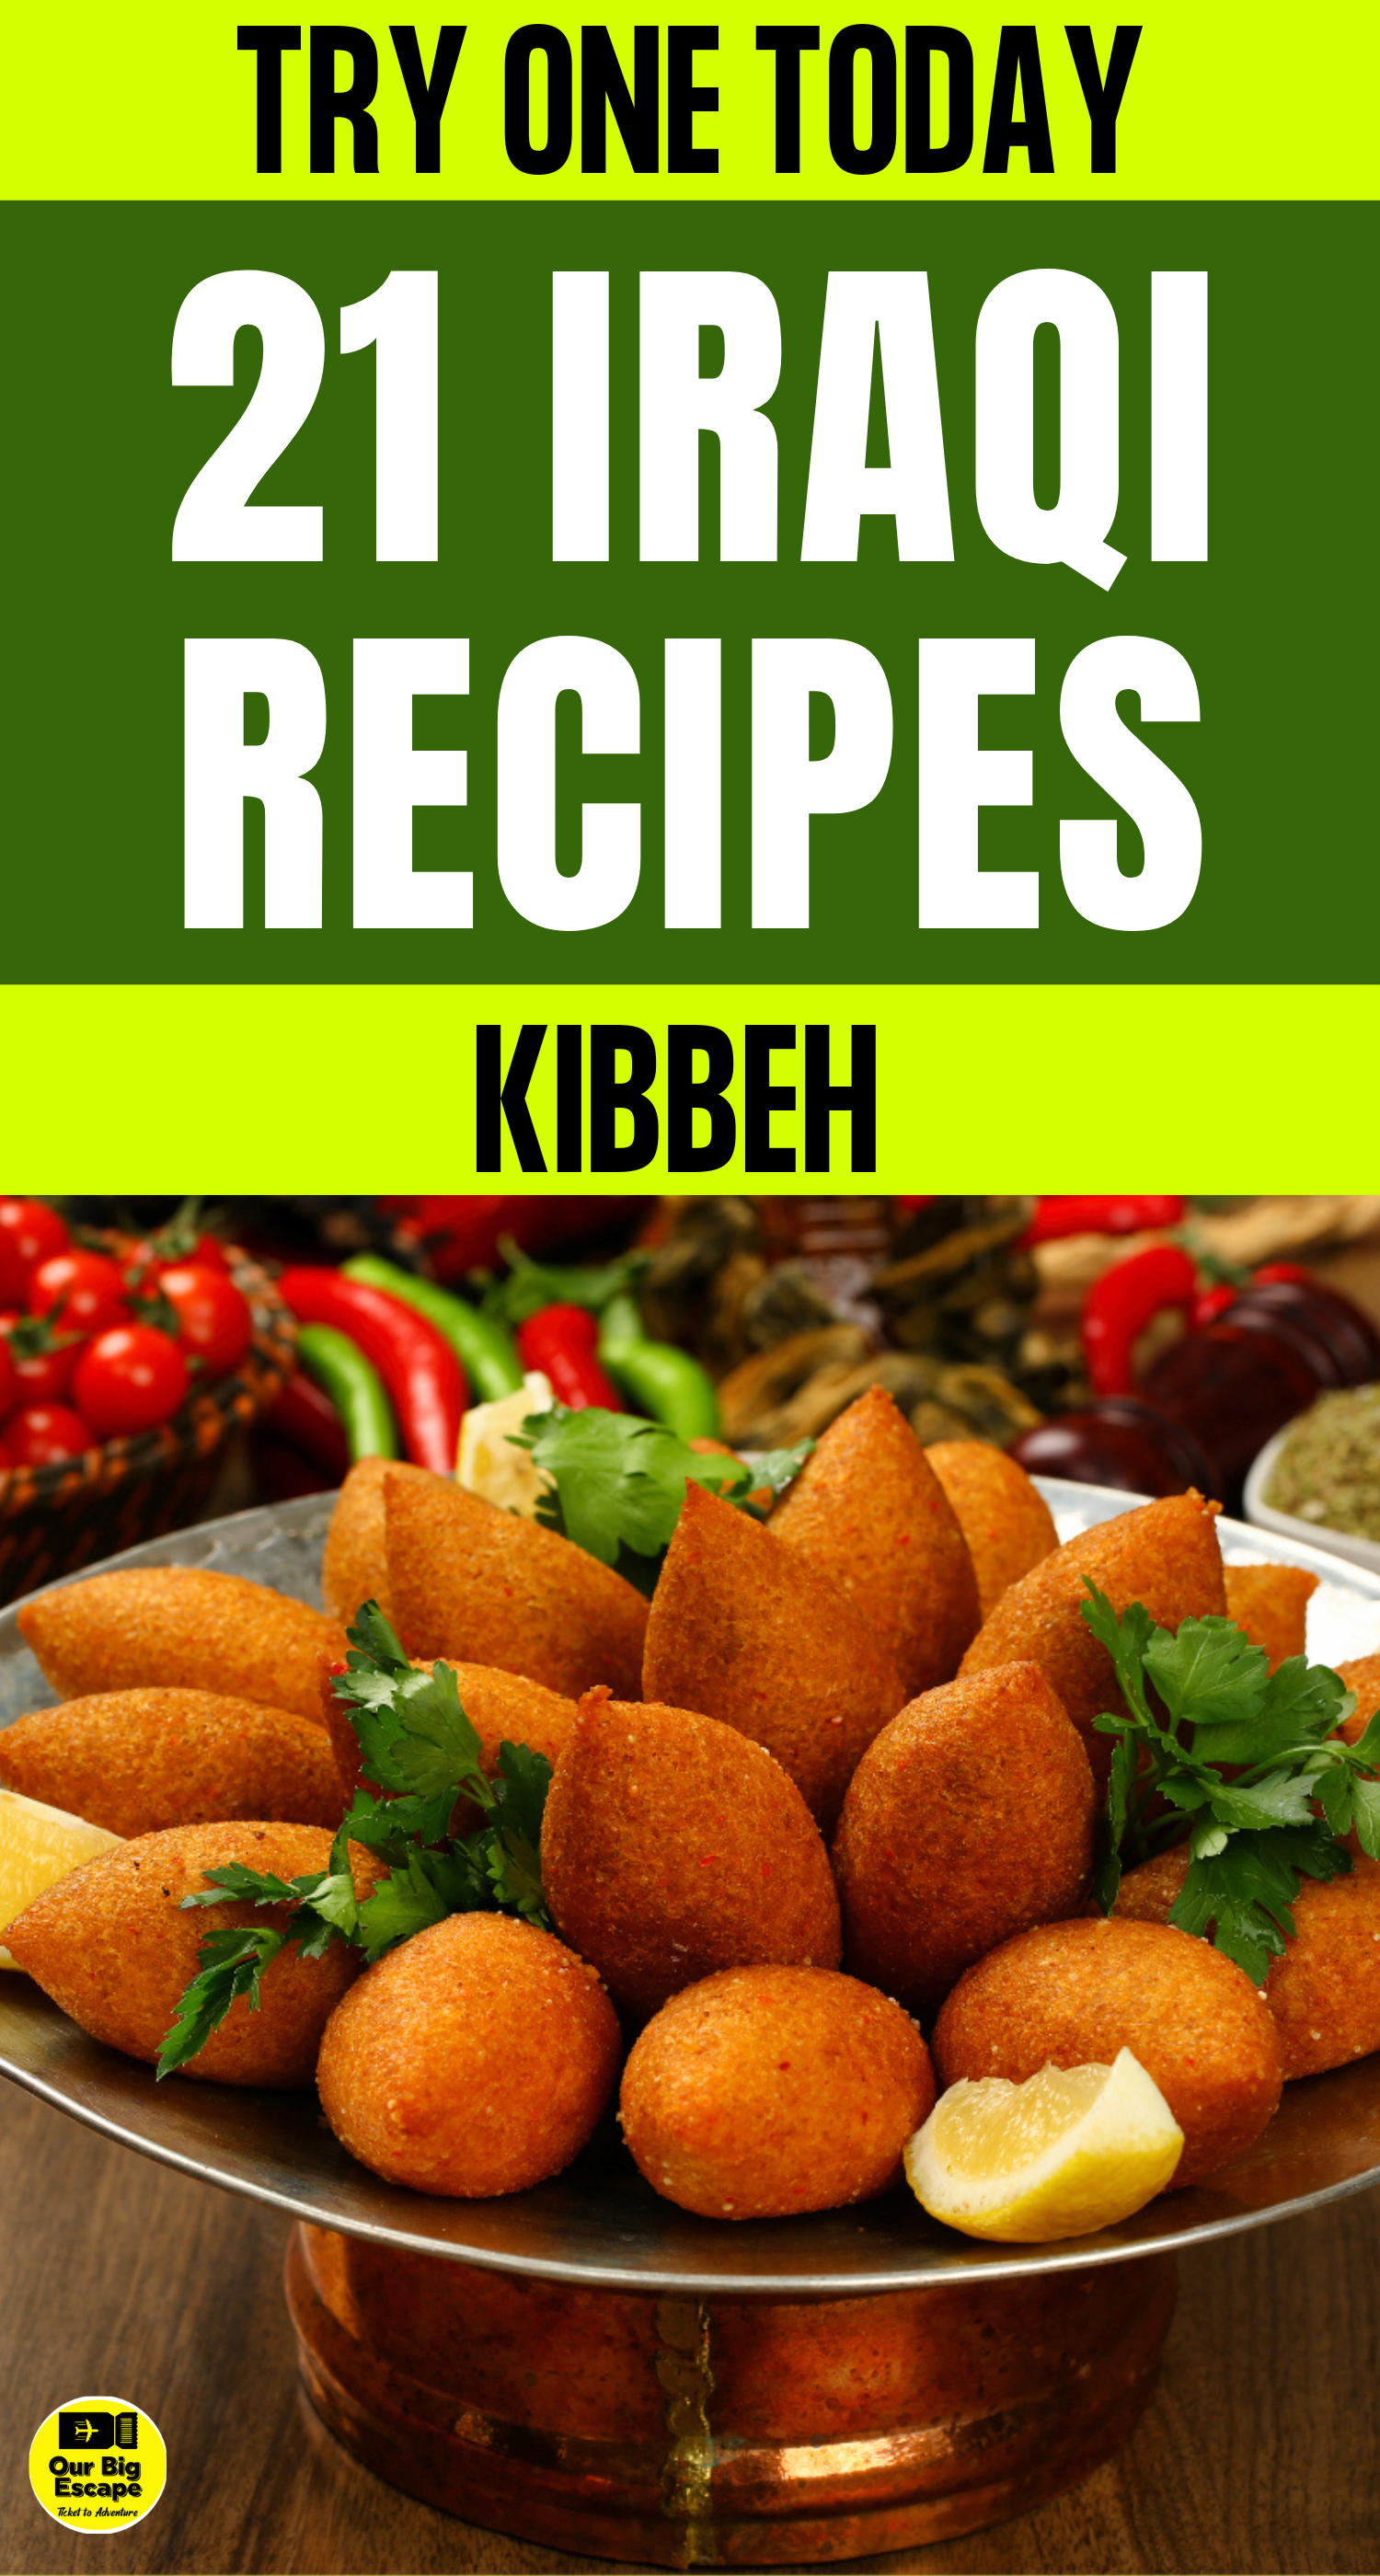 21 Iraqi Recipes - Kibbeh